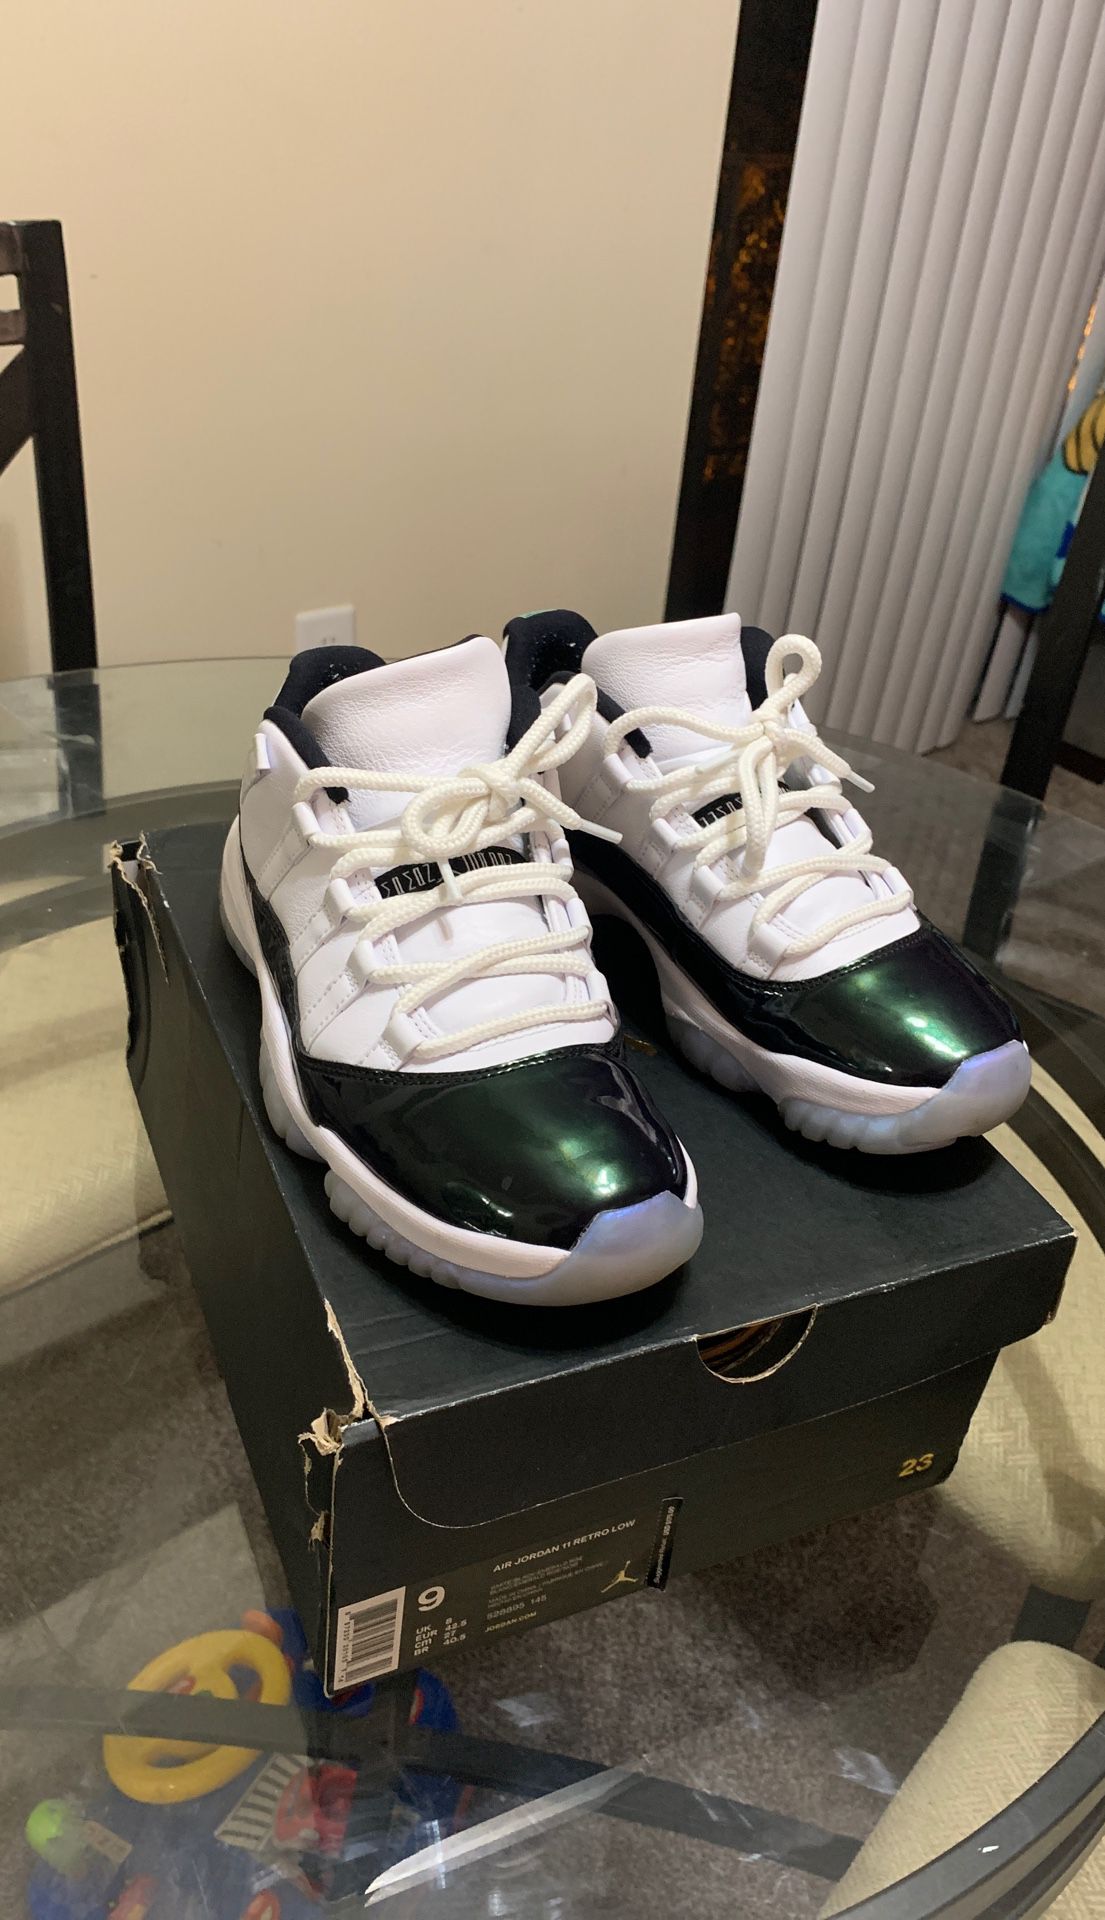 Air Jordan 11 Low Emerald Size 9